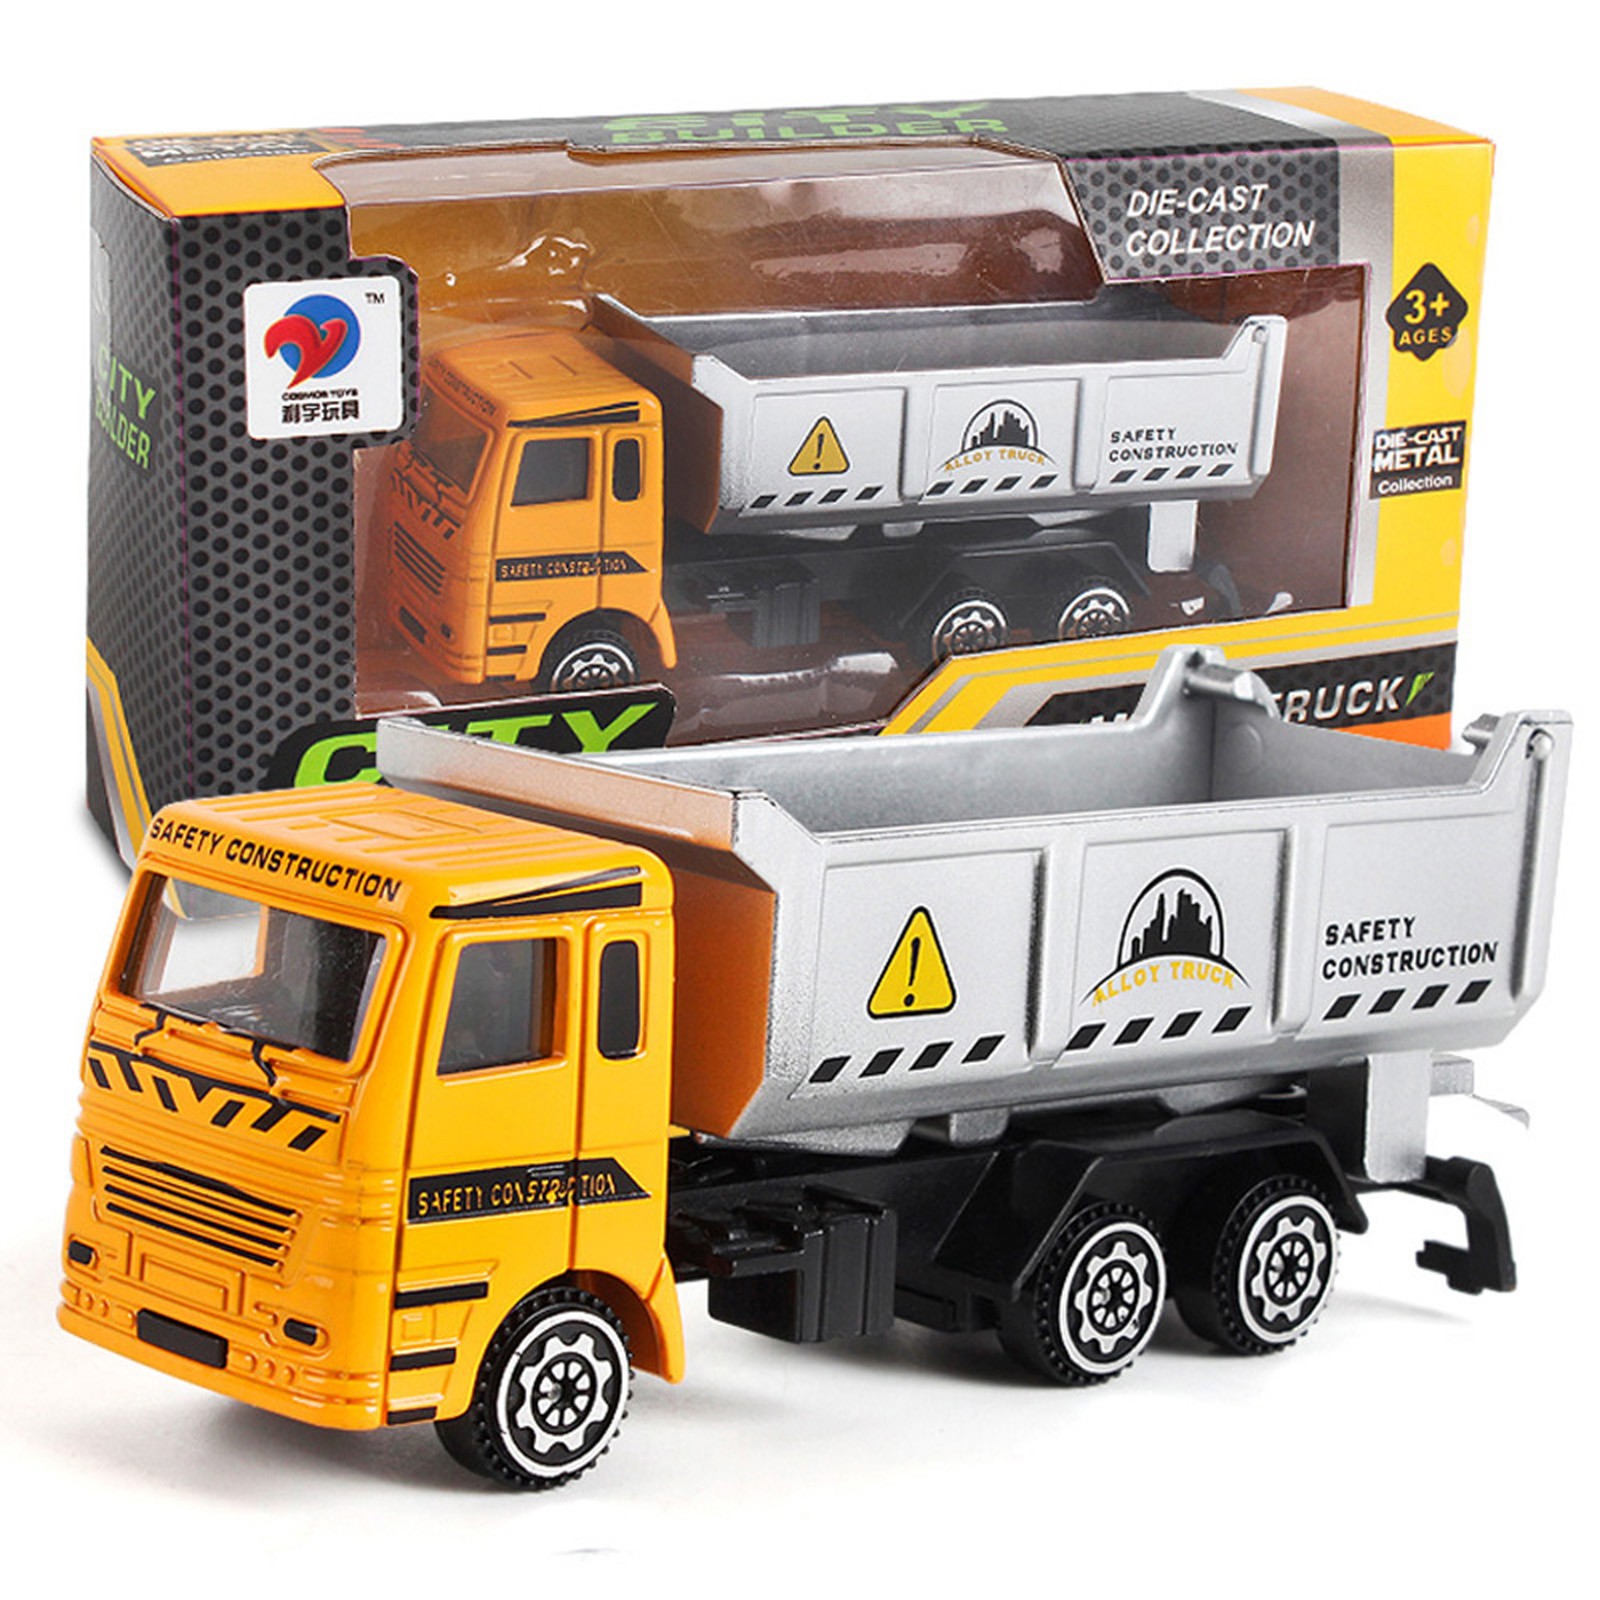 Kids Construction Dump Truck Digger Excavator Play Set Toddler Boy Toy Gift New